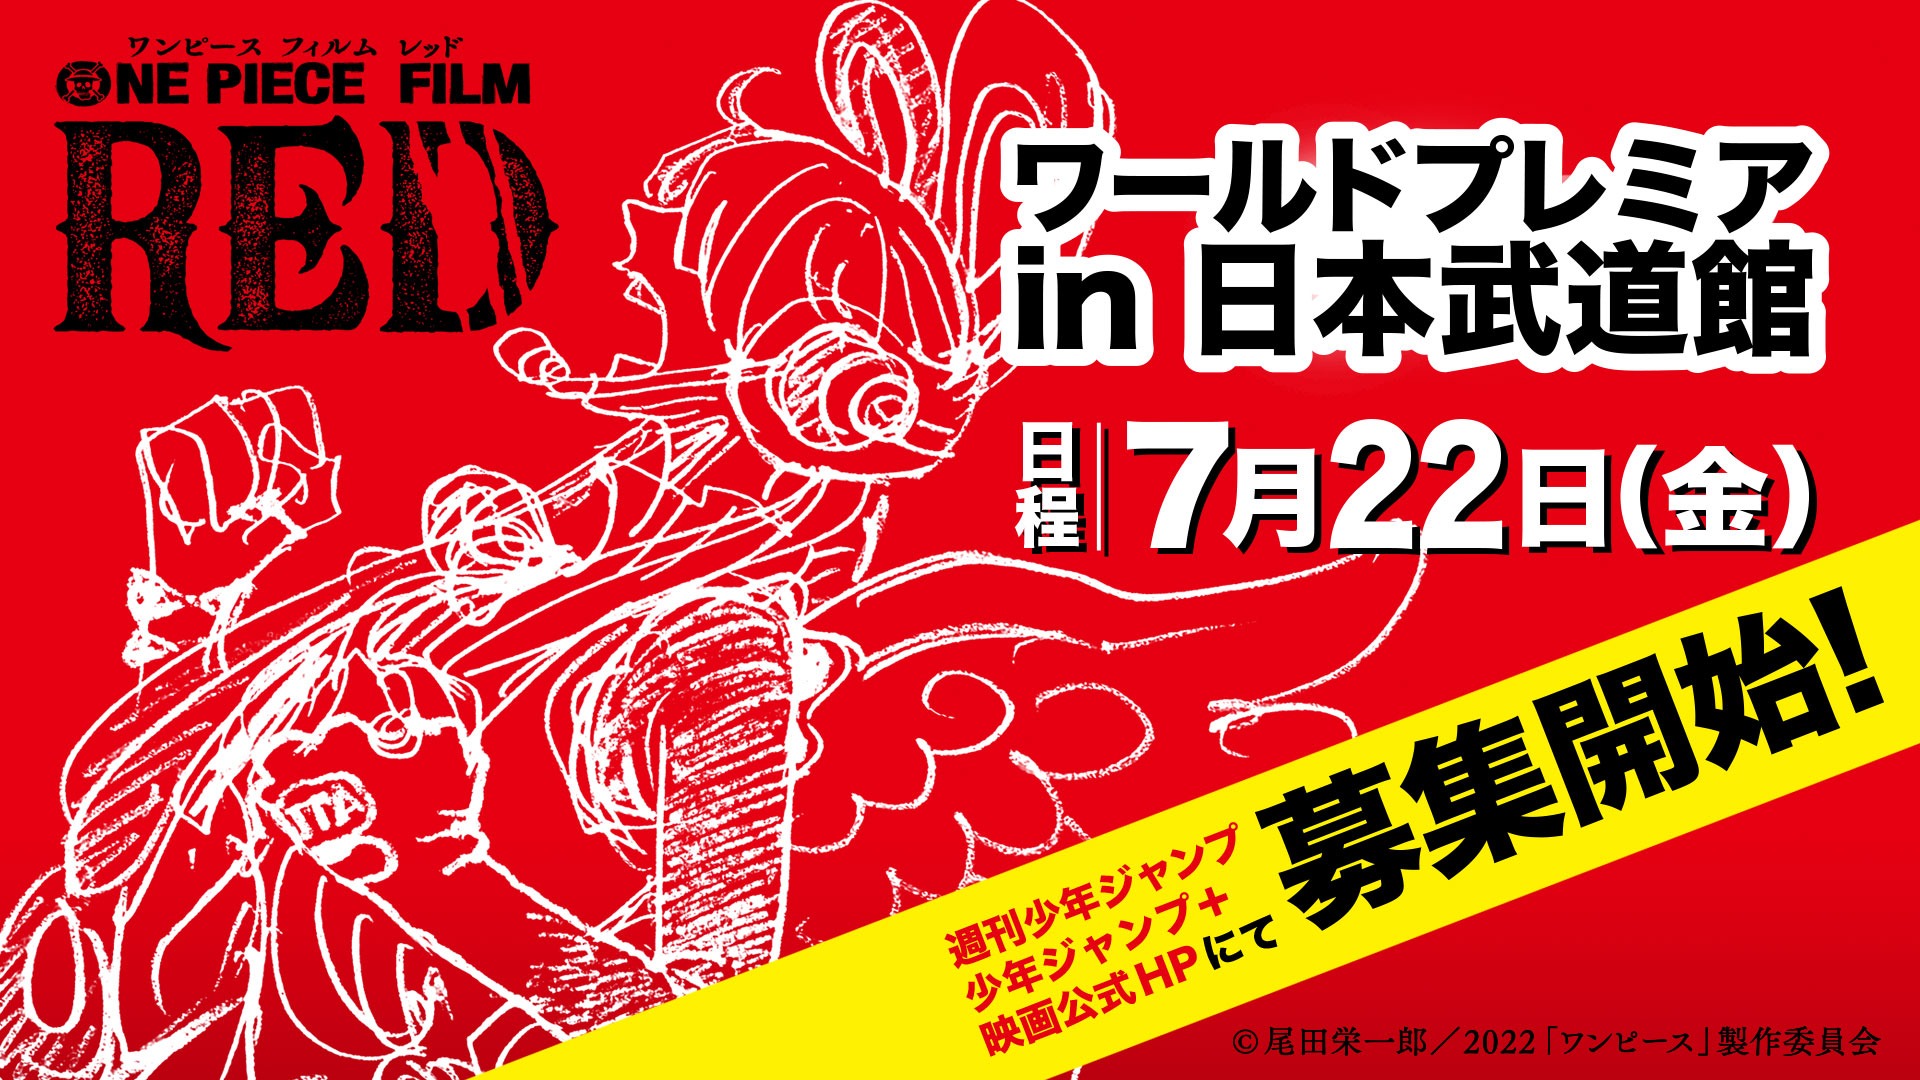 Code Geass' Goro Taniguchi Directs One Piece Film Red Opening on